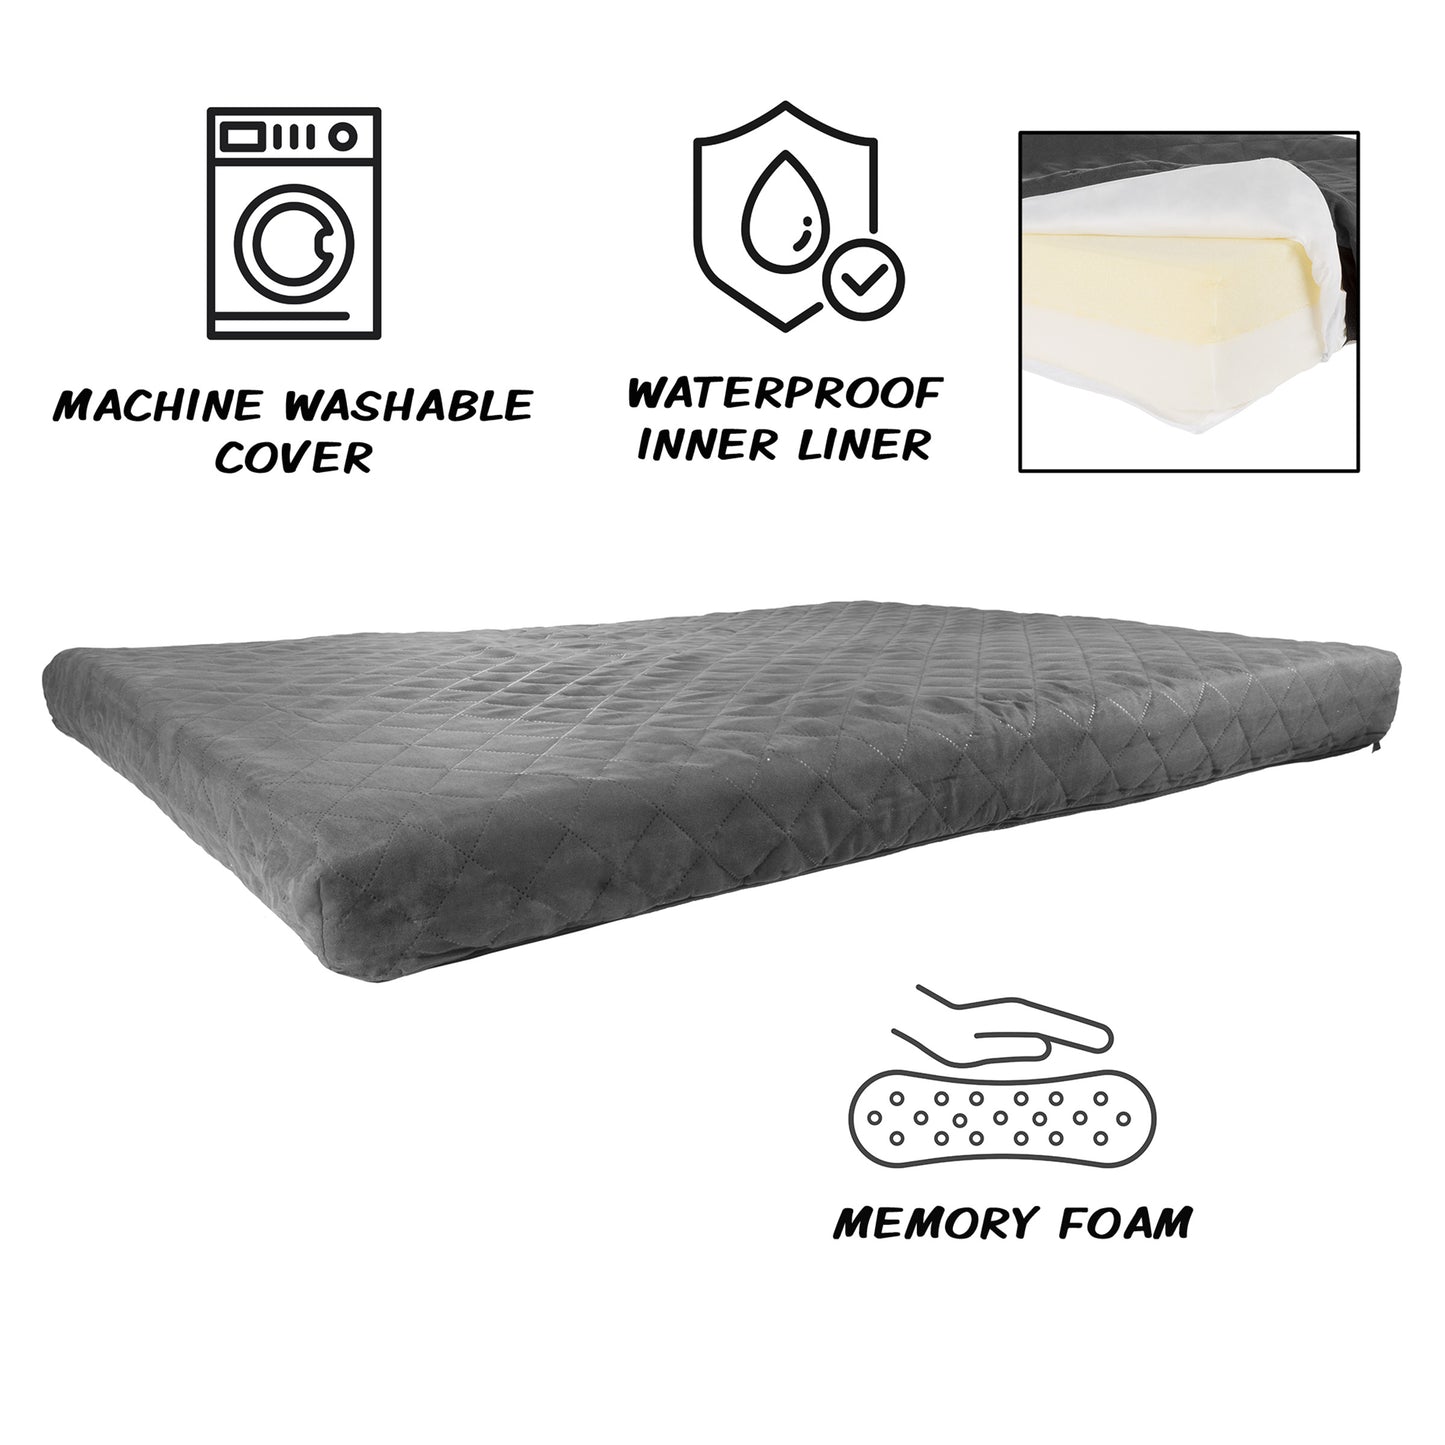 2-Layer Memory Foam Dog Bed